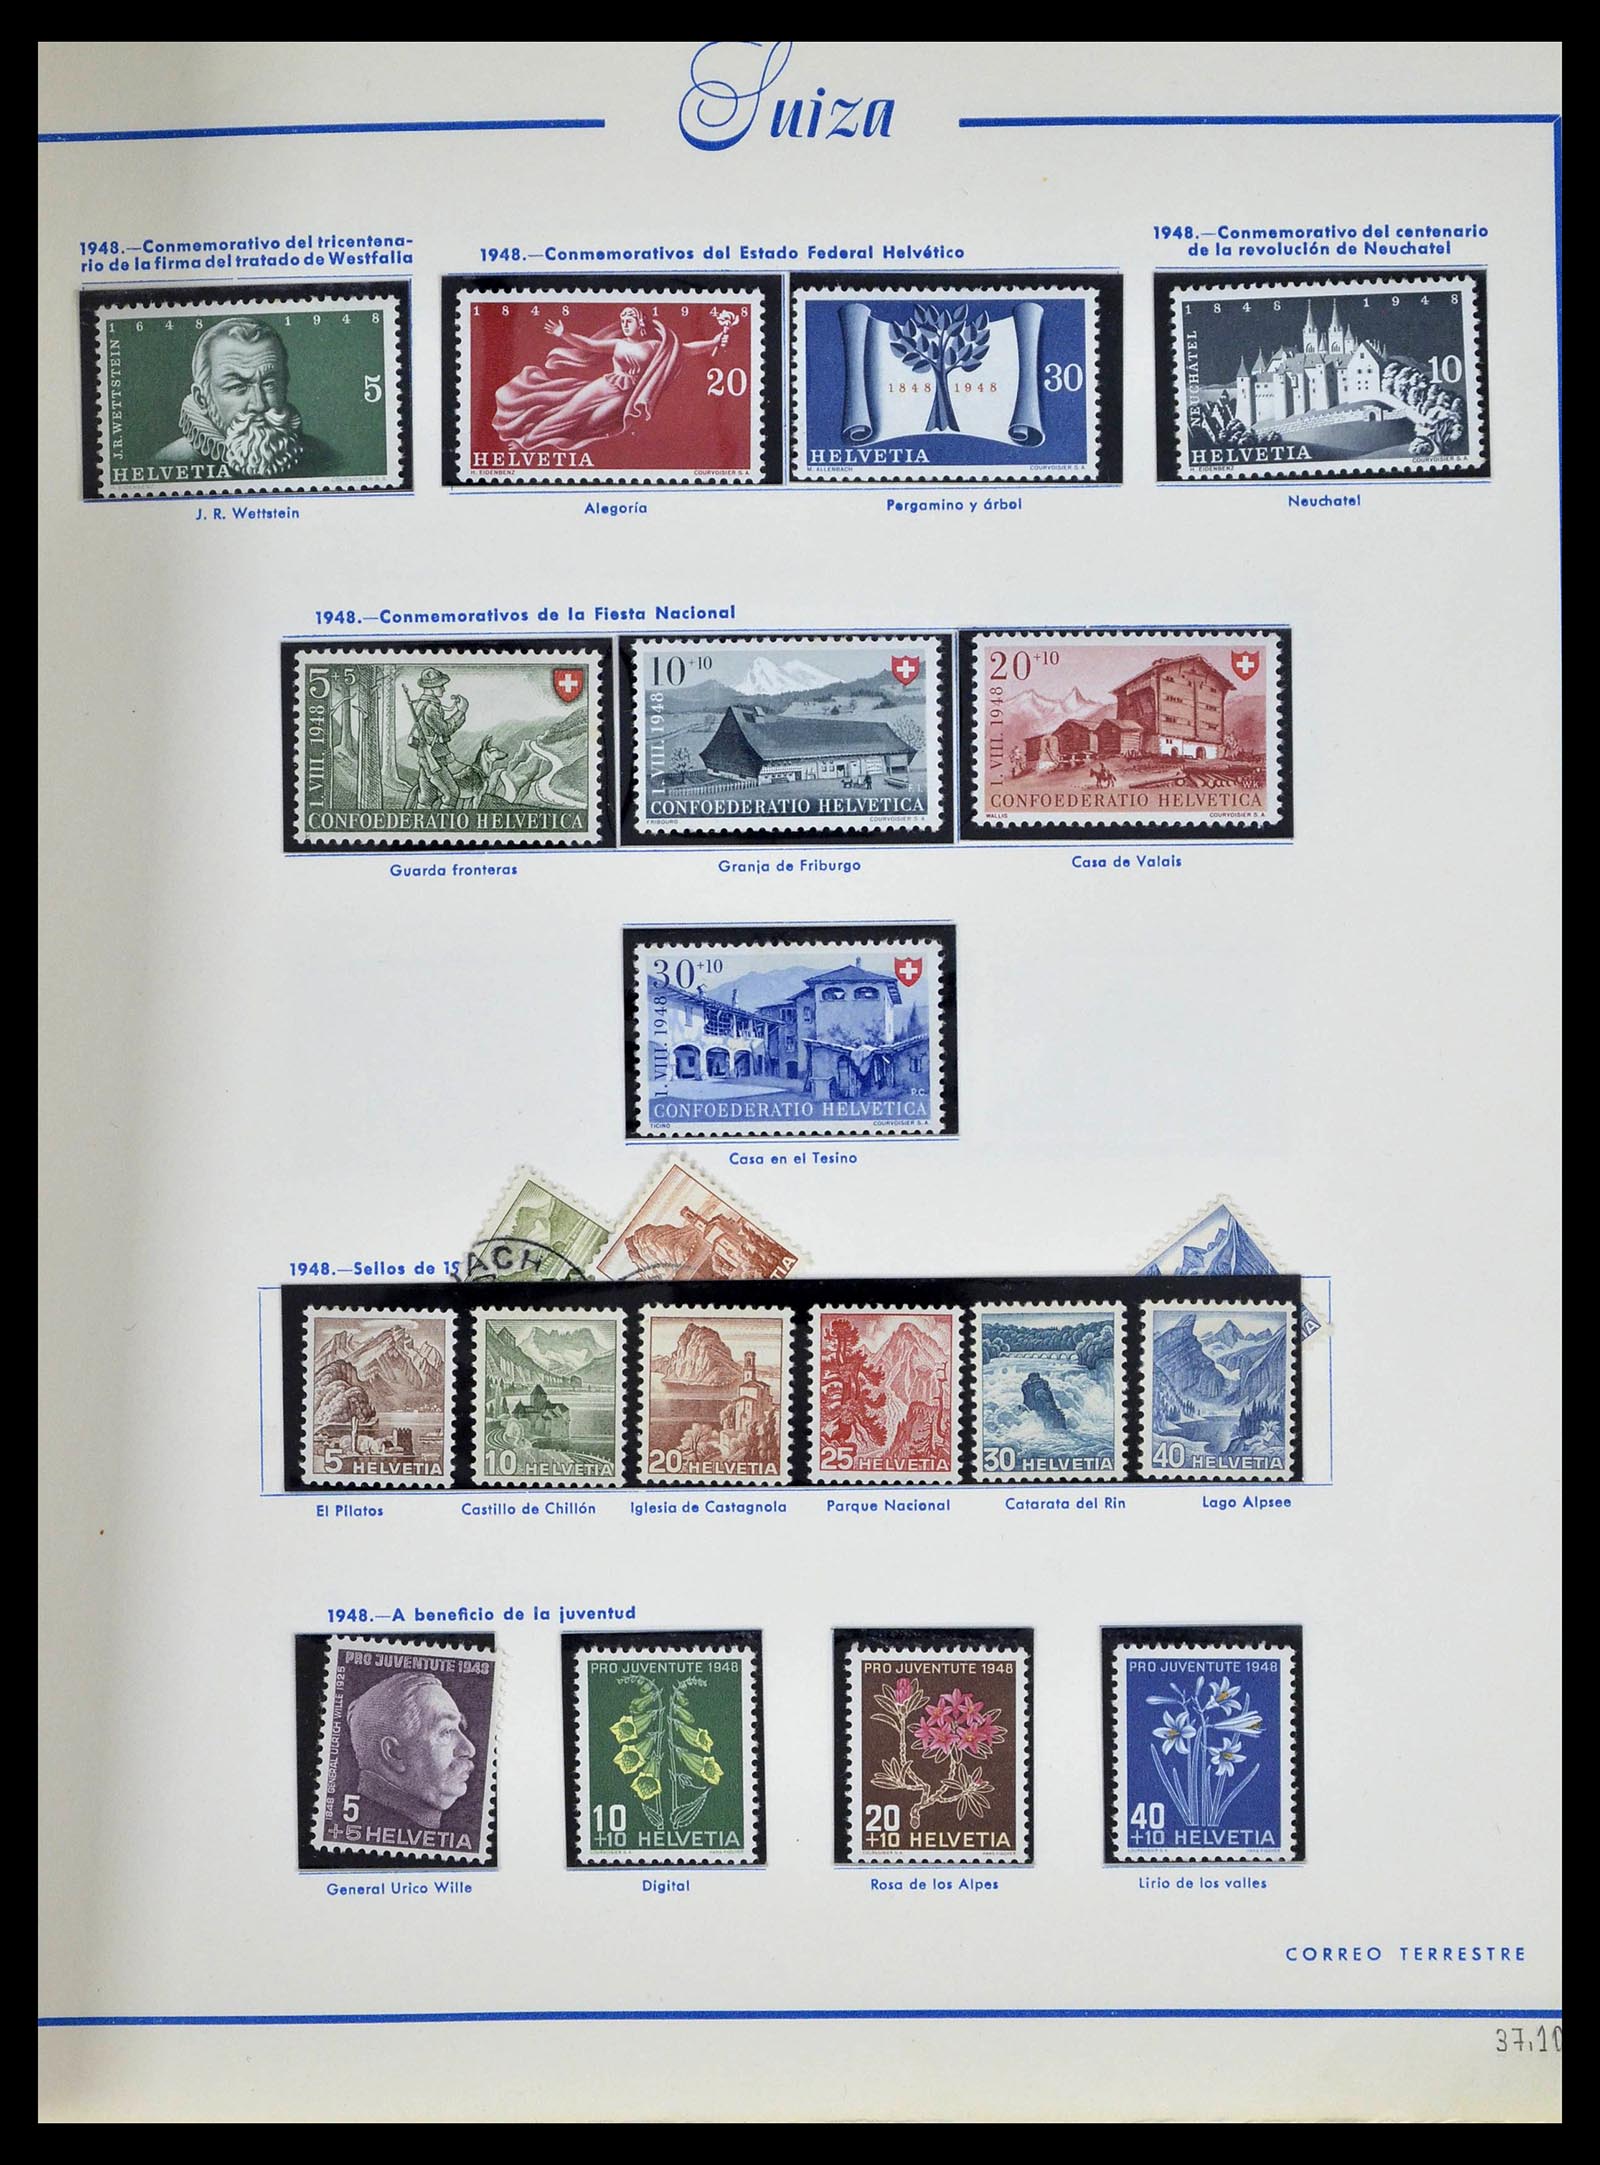 39217 0027 - Stamp collection 39217 Switzerland 1850-1986.